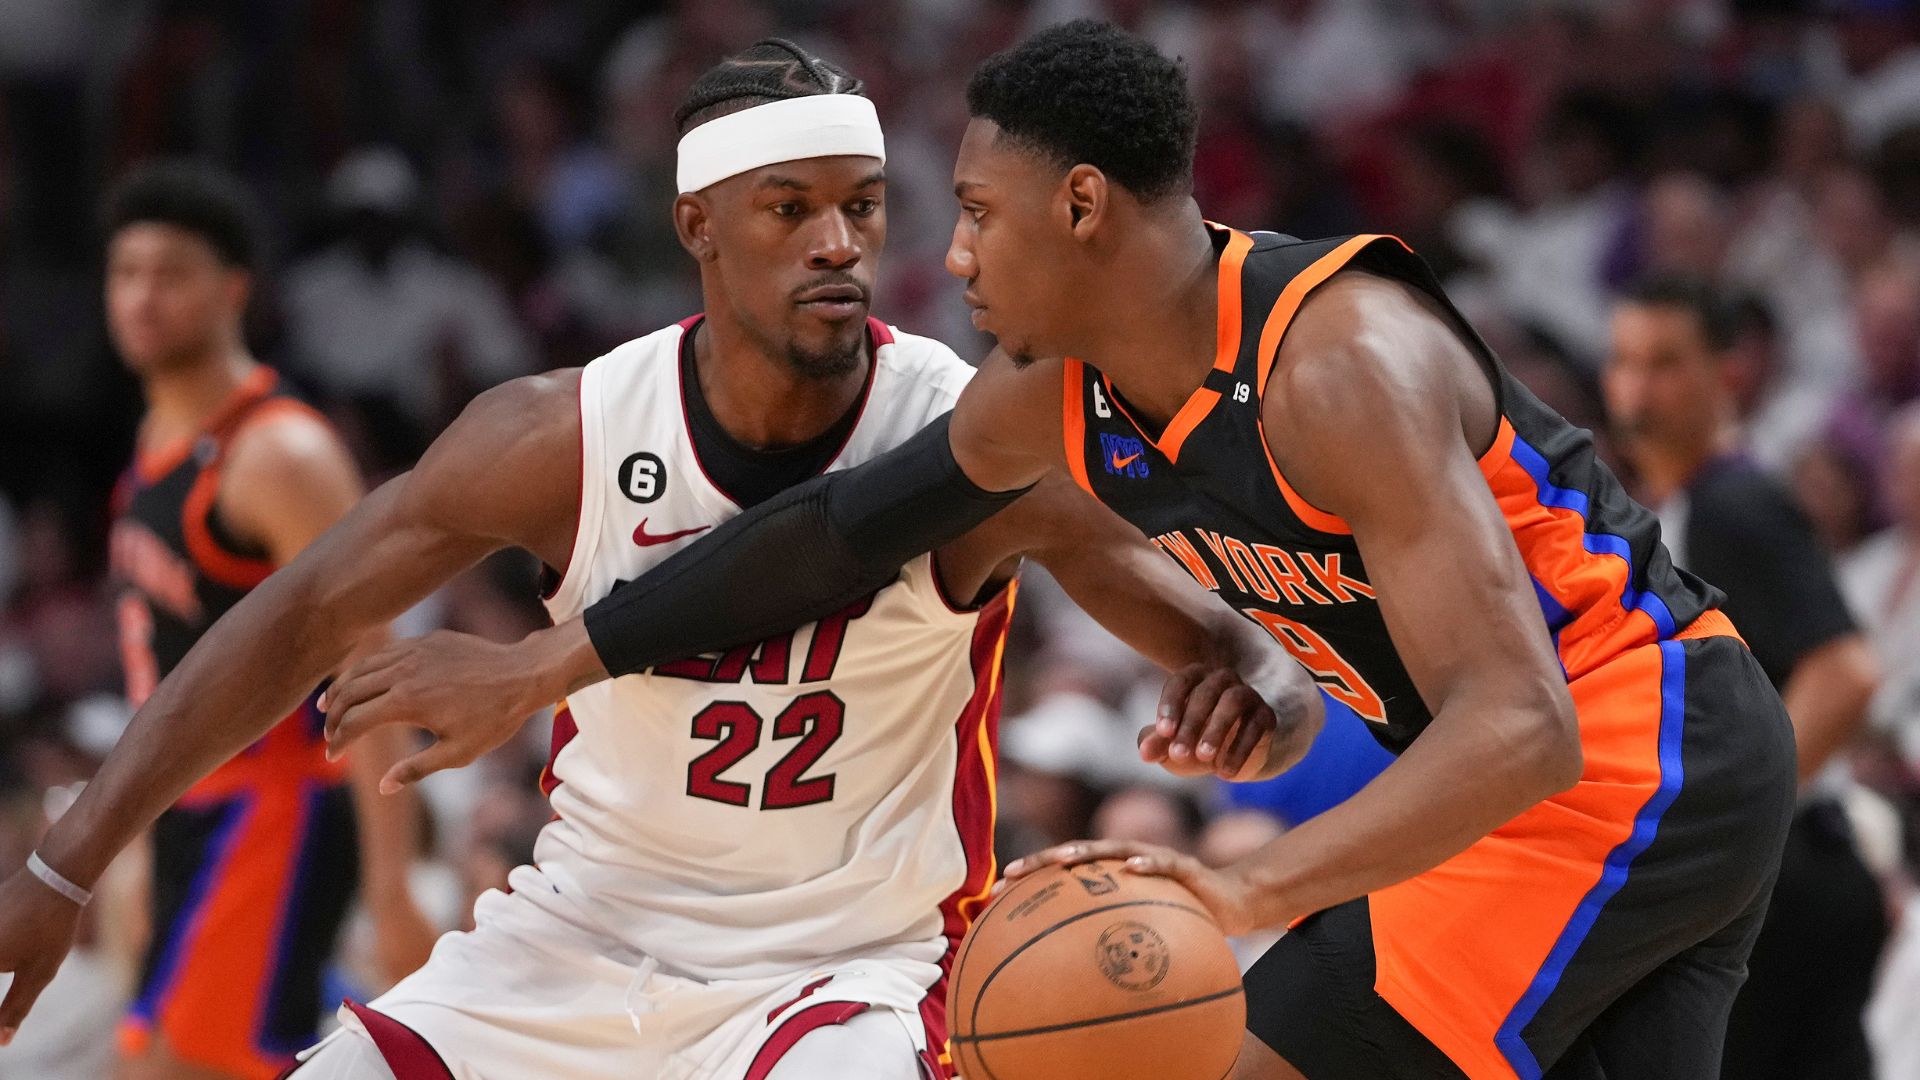 Miami Heat beats New York Knicks in NBA